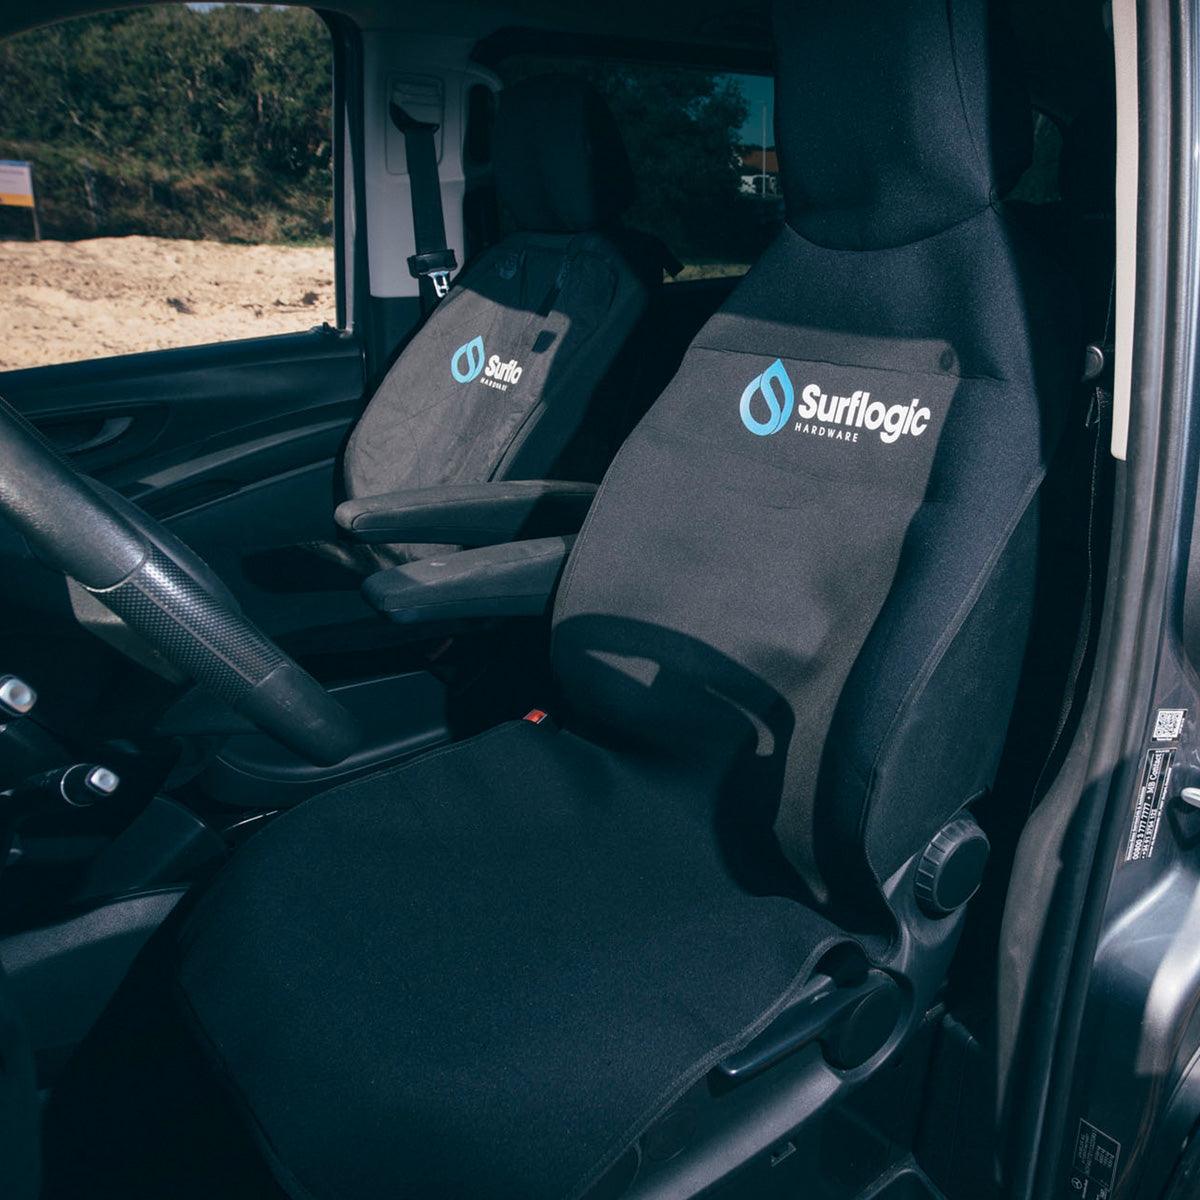 Surflogic Neoprene Car Seat Cover - Kiteshop.com